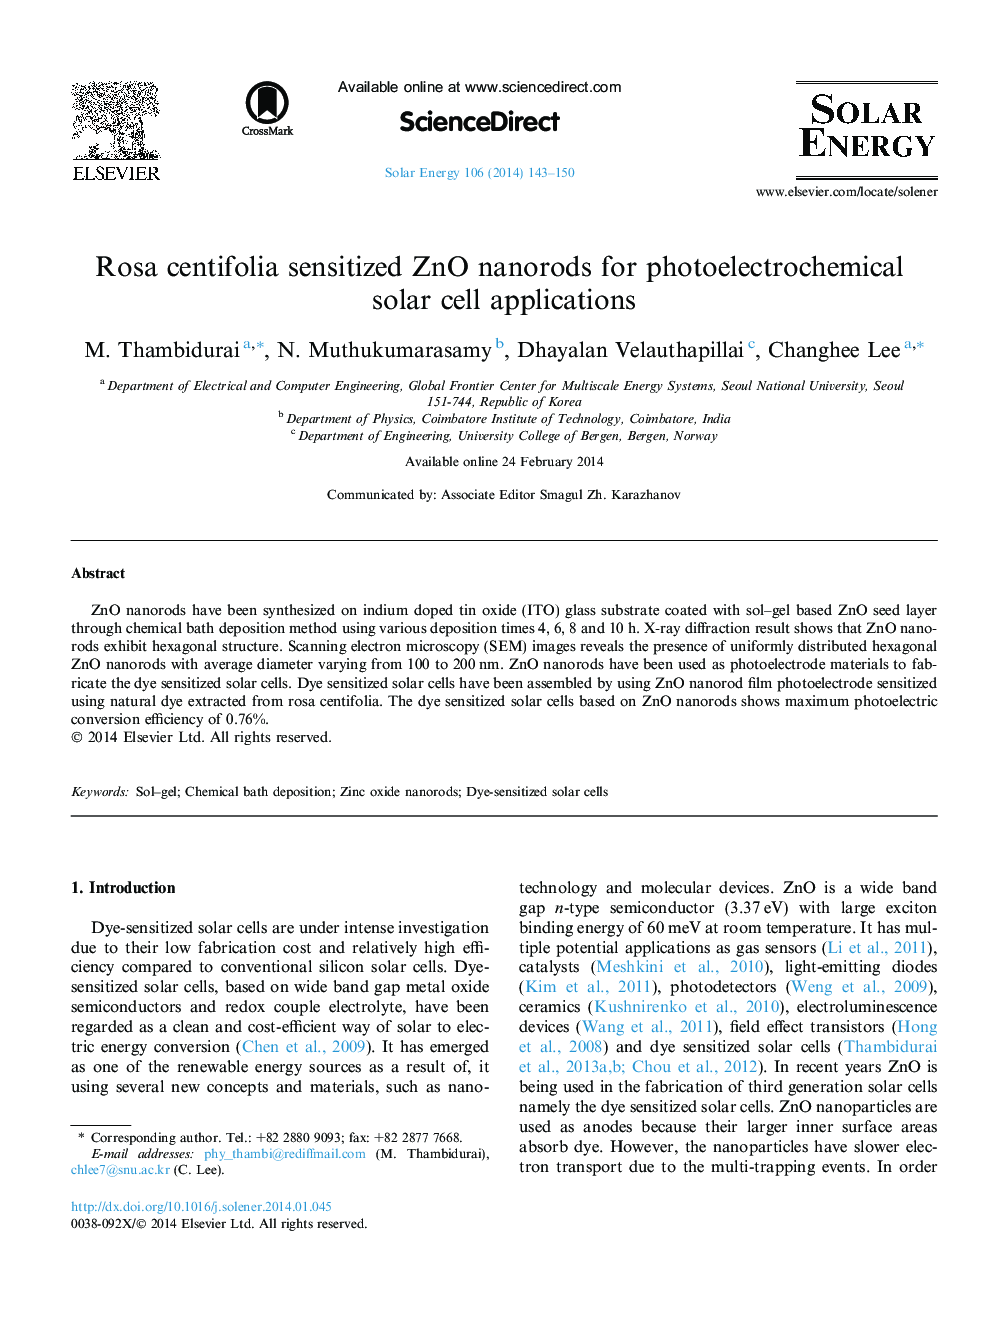 Rosa centifolia sensitized ZnO nanorods for photoelectrochemical solar cell applications